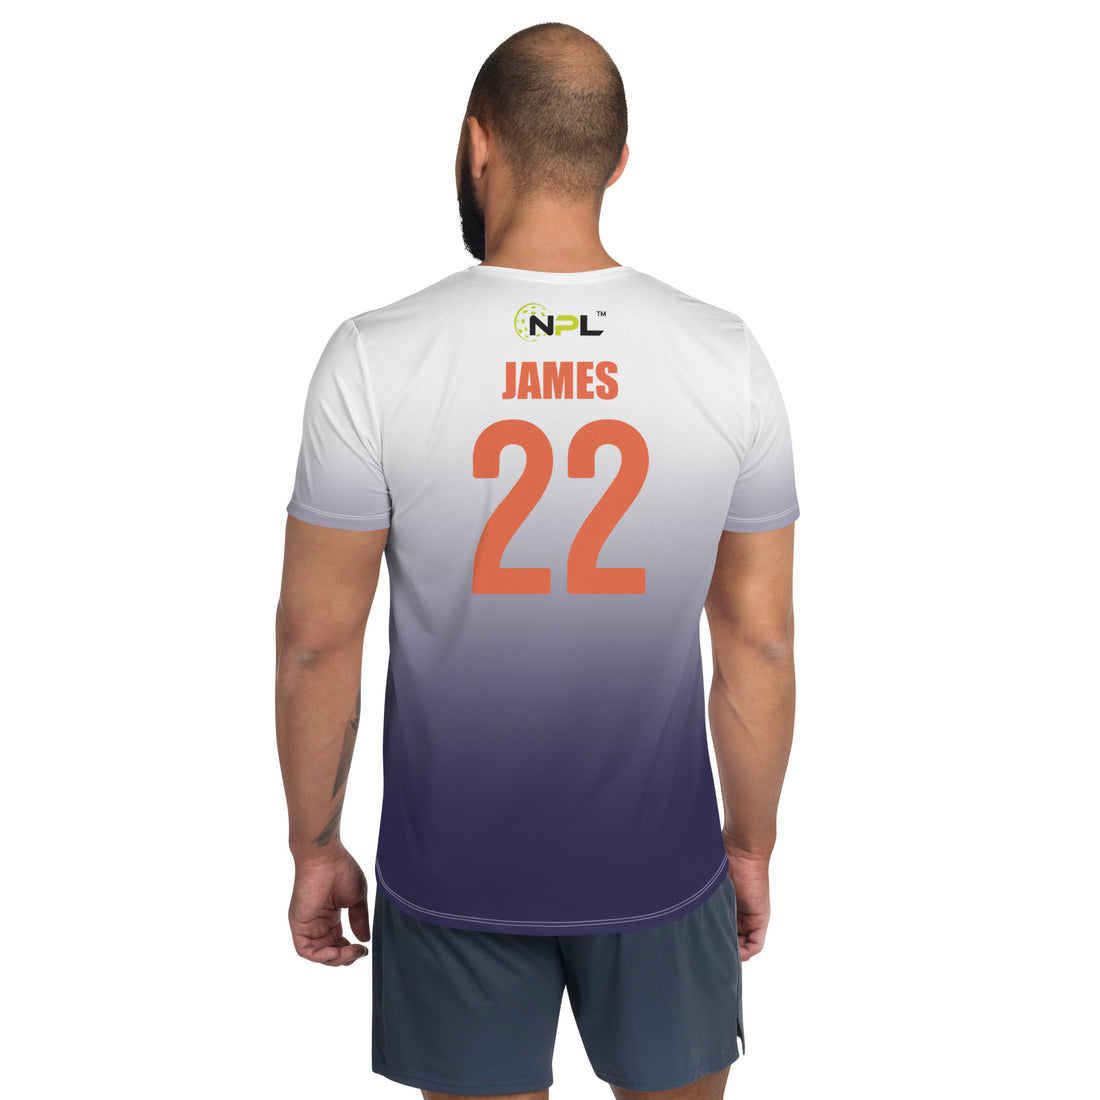 JULENE JAMES 22 NAPLES JBB UNITED™ SKYBLUE™ Fan JERSEY for men - Violet NOIR OMBRE